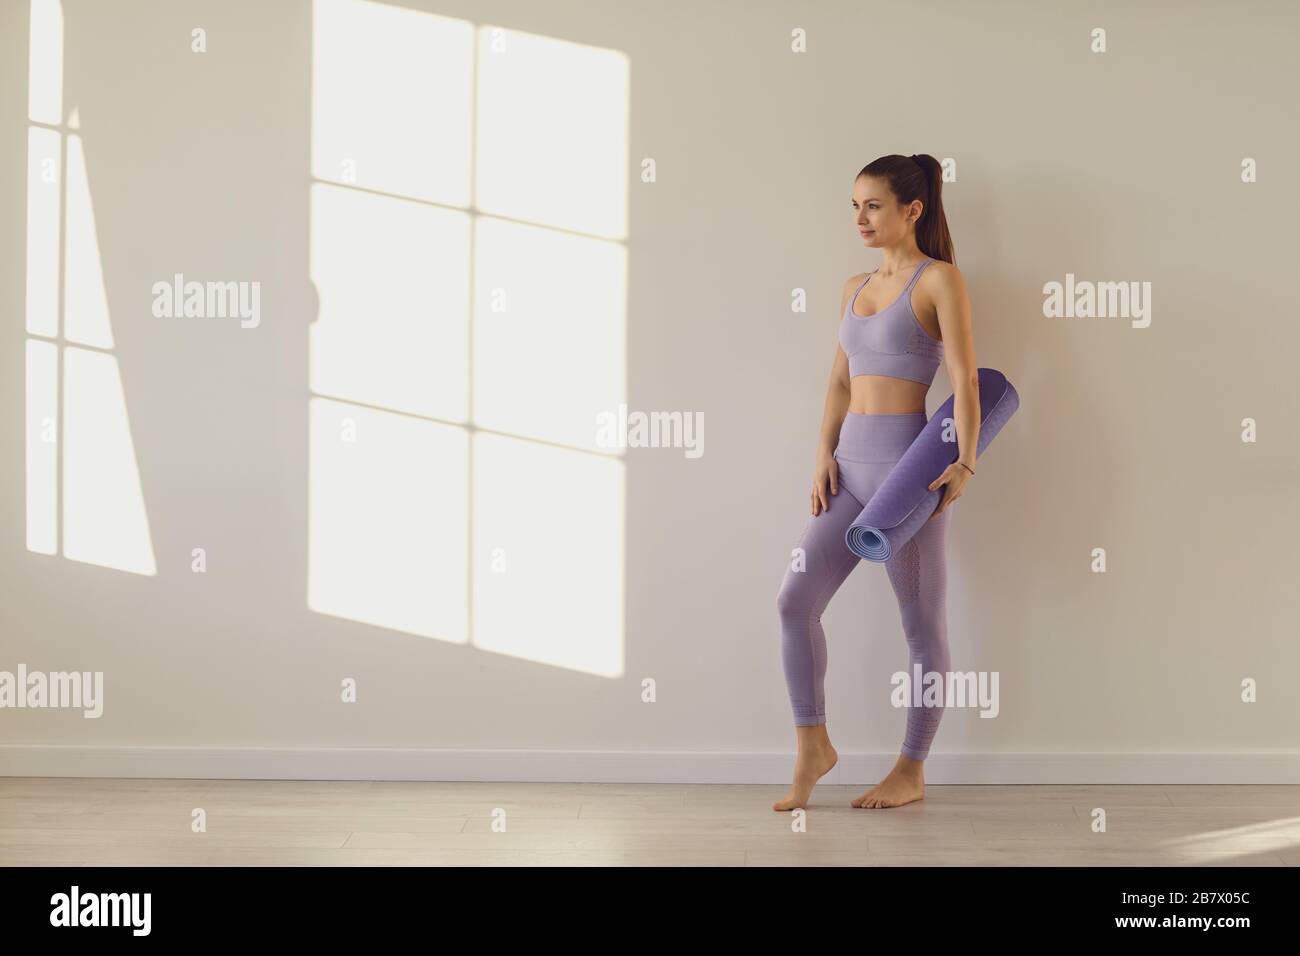 Yoga-Frau. Fröhliche Sportfrau mit Yogamatte an weißer Wand in einem hellen Raum. Stockfoto